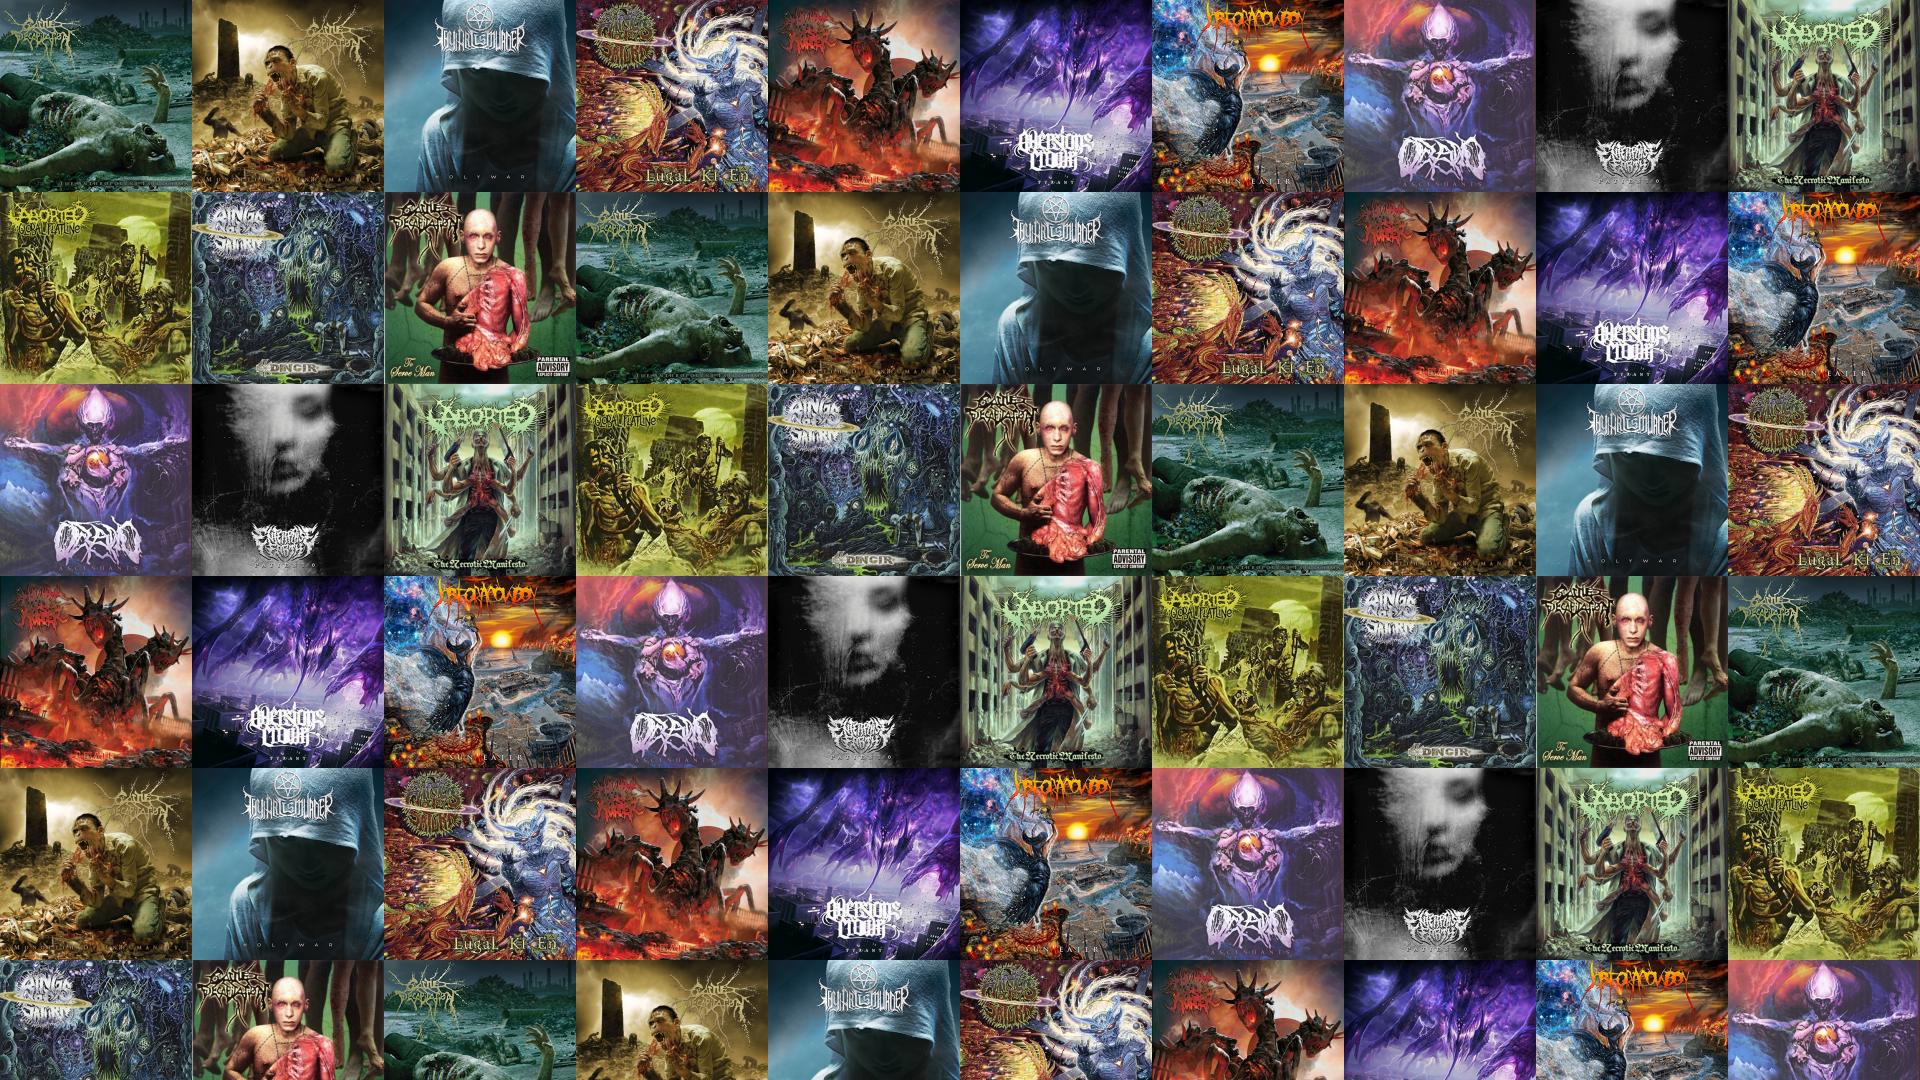 Collage - HD Wallpaper 